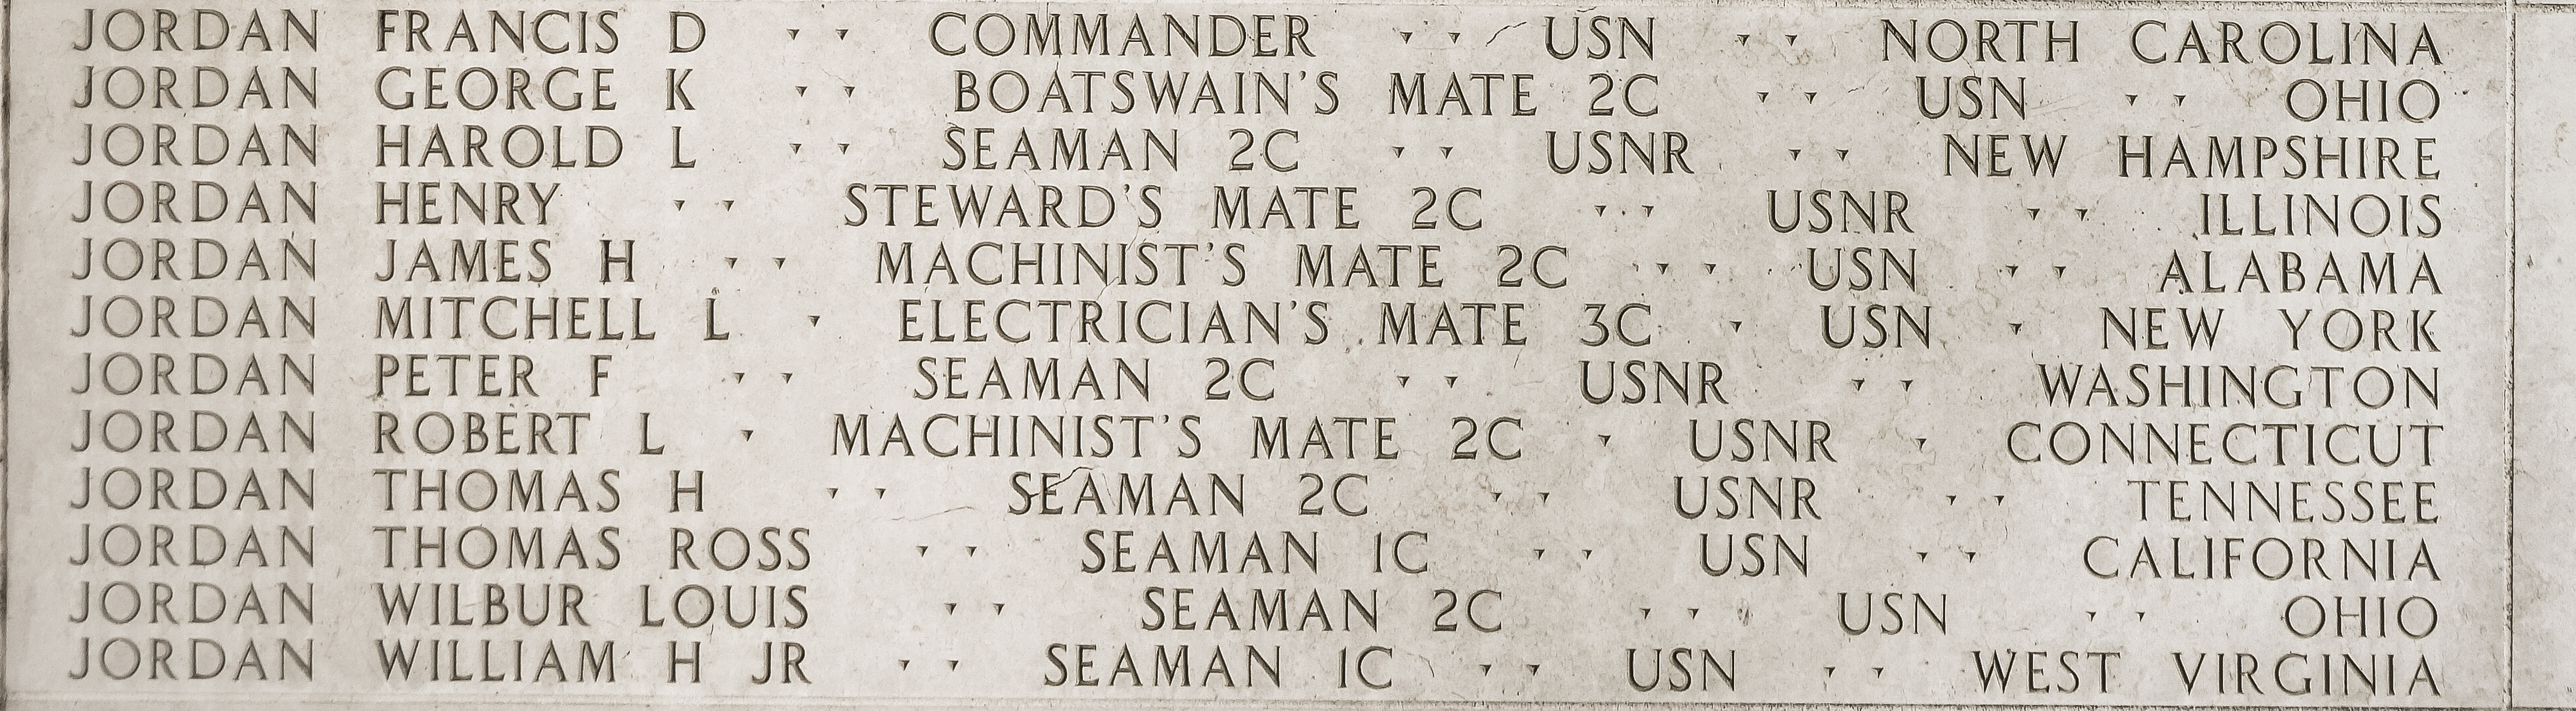 William H. Jordan, Seaman First Class